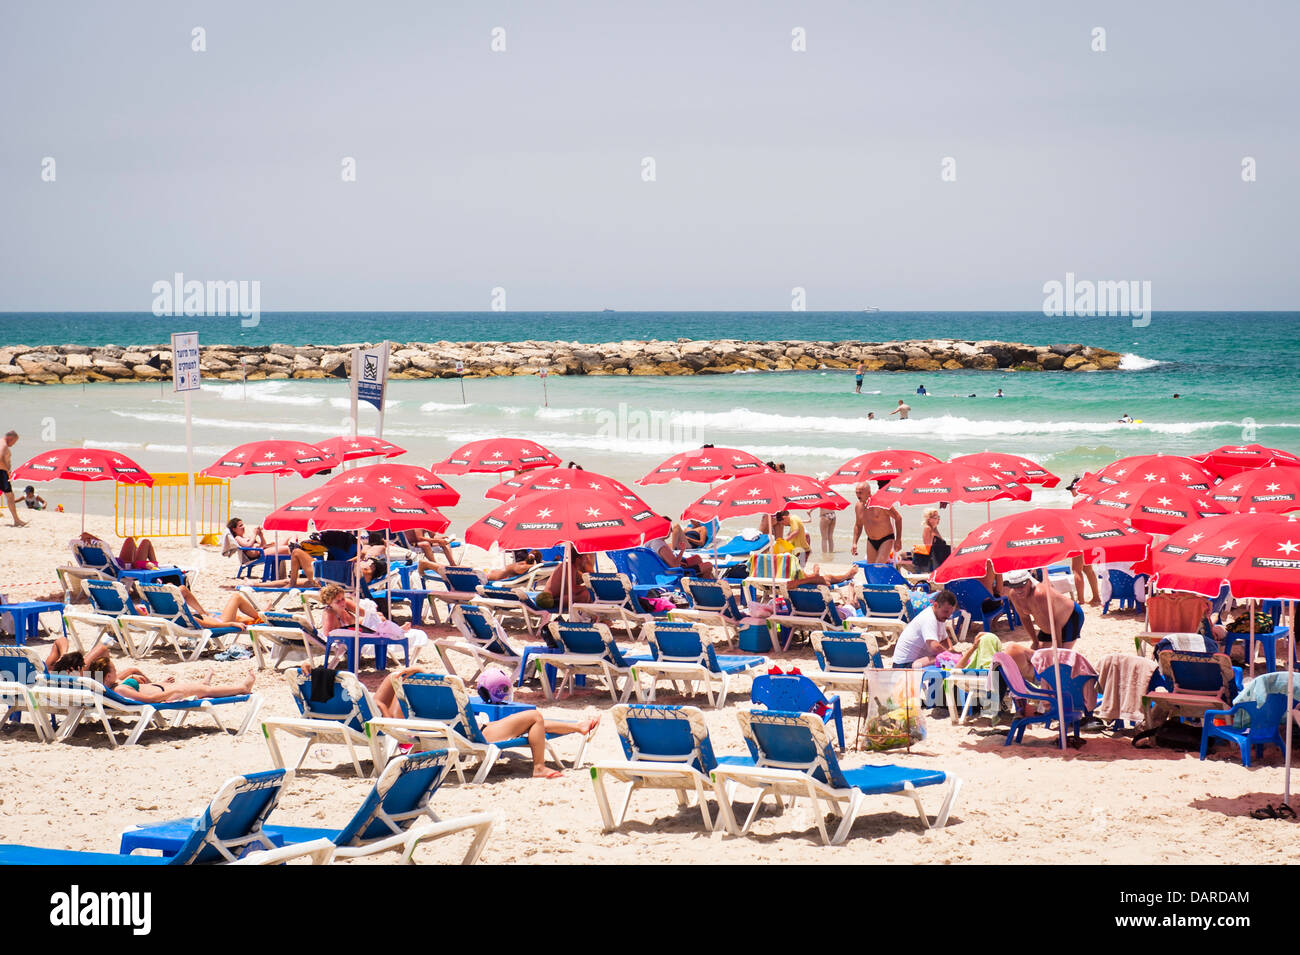 Israel Tel Aviv sand beach scene parasols umbrellas sonnenschirm sea lounger loungers people sunbathers swimming swimmers stone breakwater sea Stock Photo